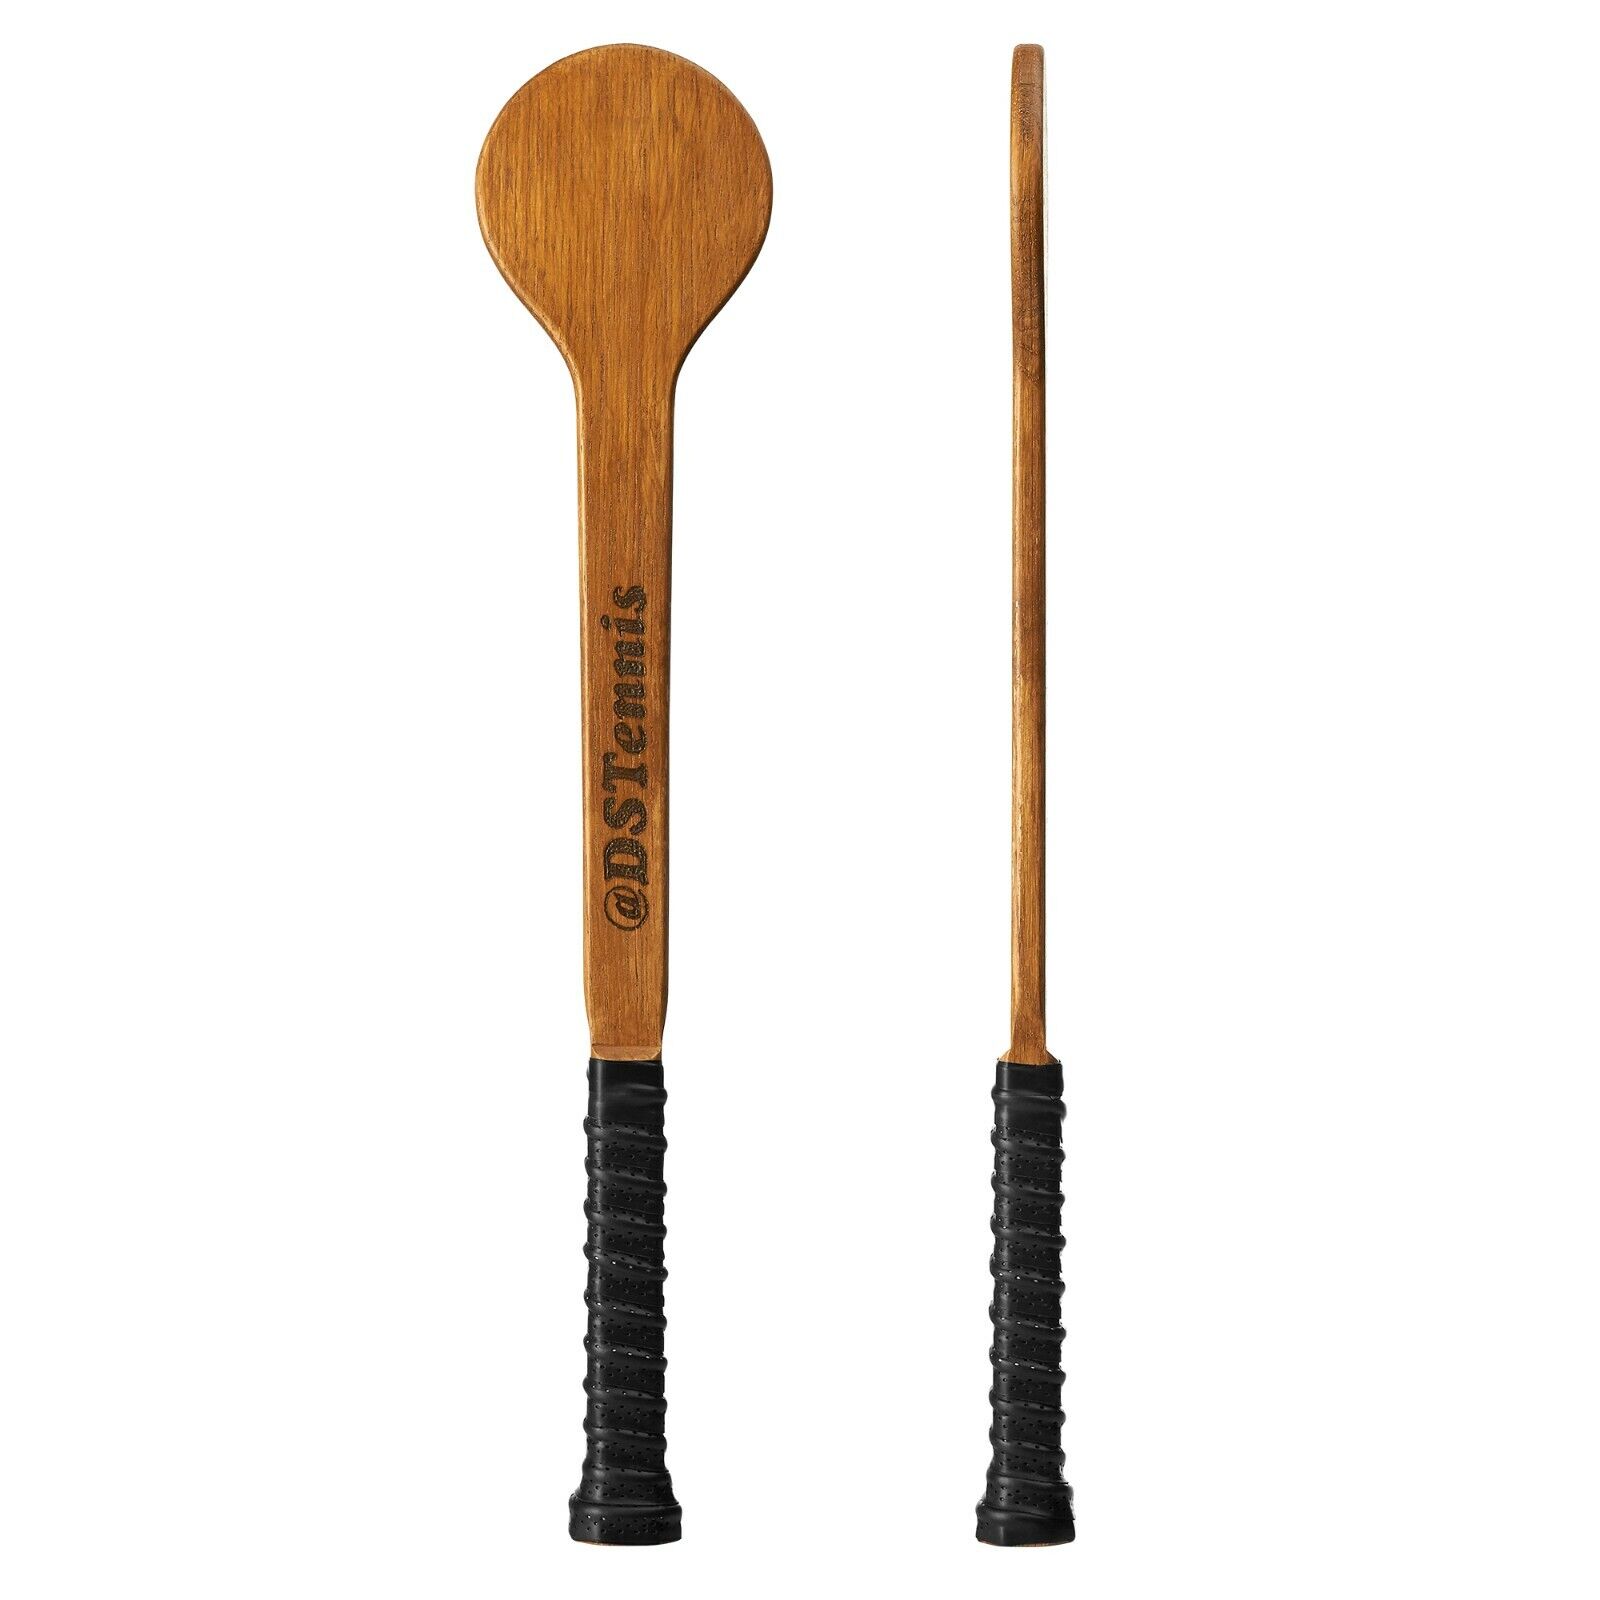 Tennis Pointer tennis Sale special price wooden spoon Lowest price challenge Mid practi Sweet racquet spot